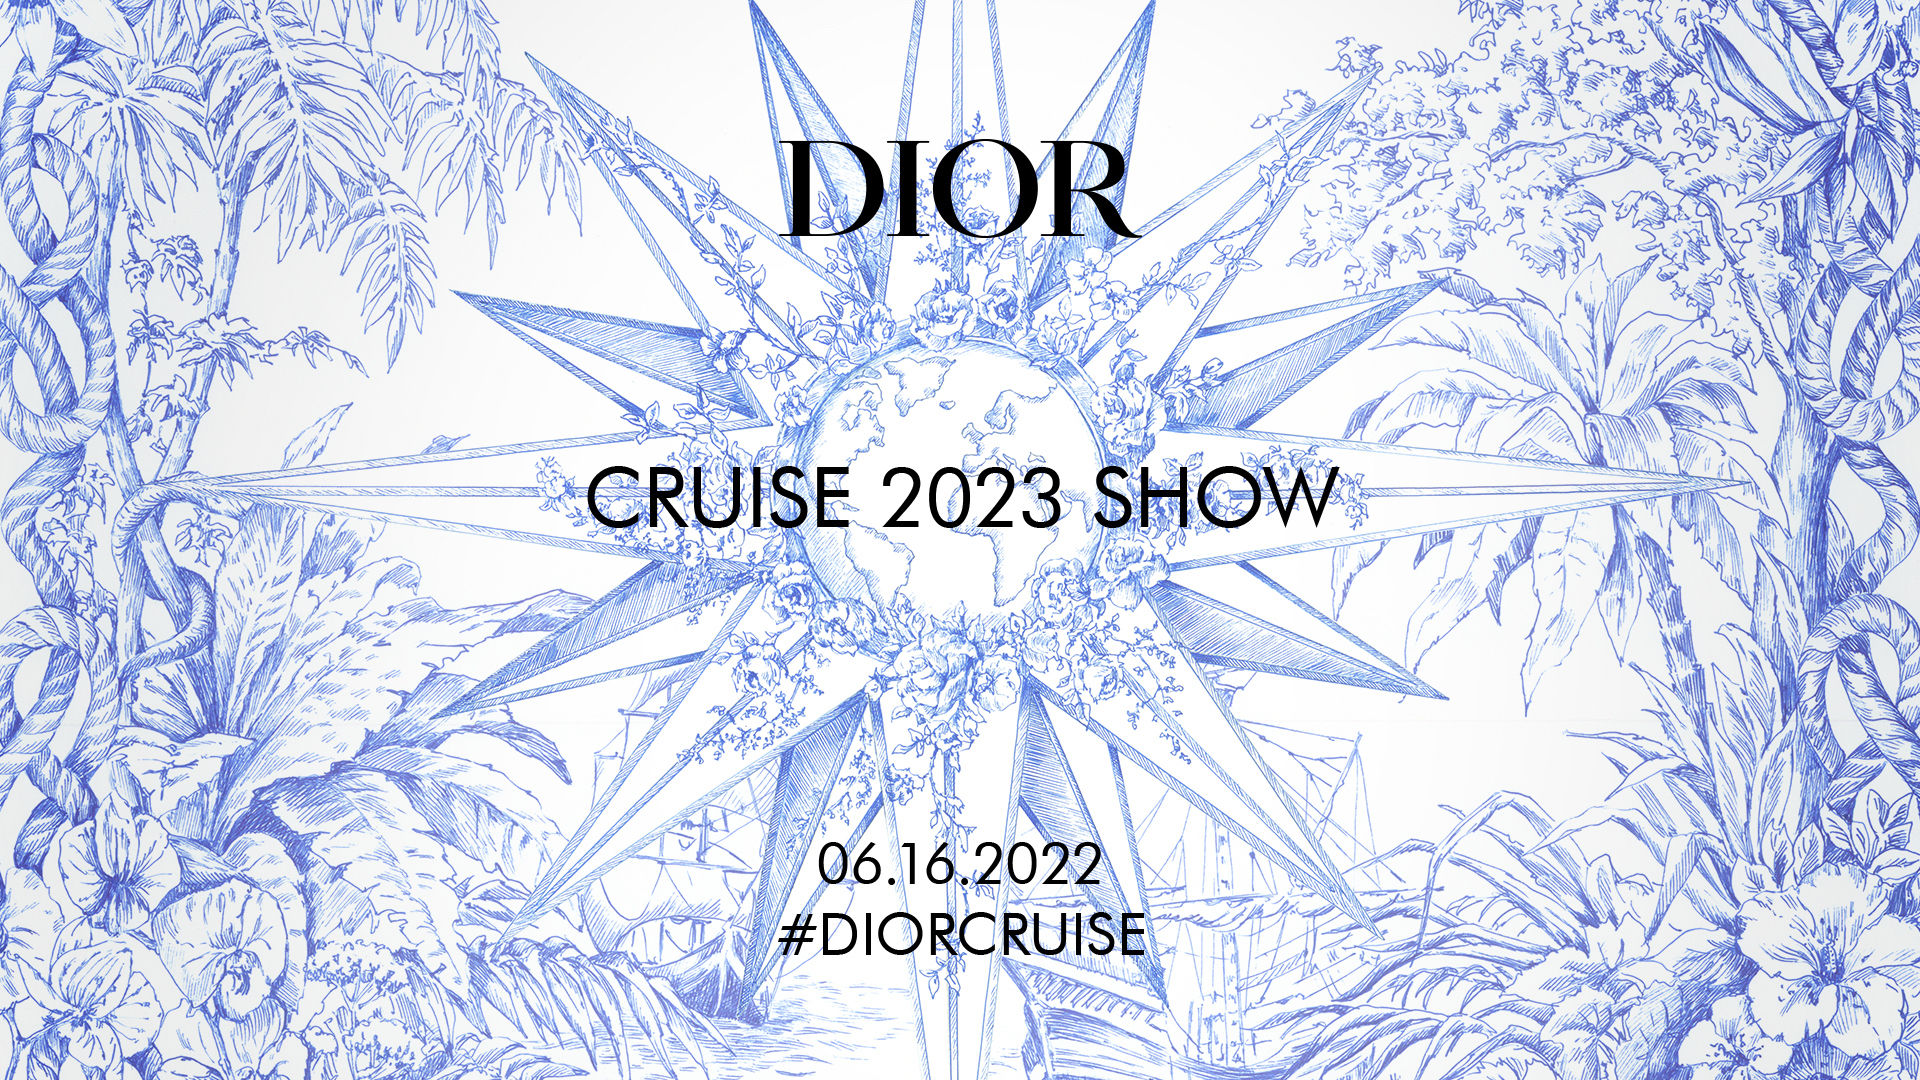 Christian Dior Sevilla Cruise 2023